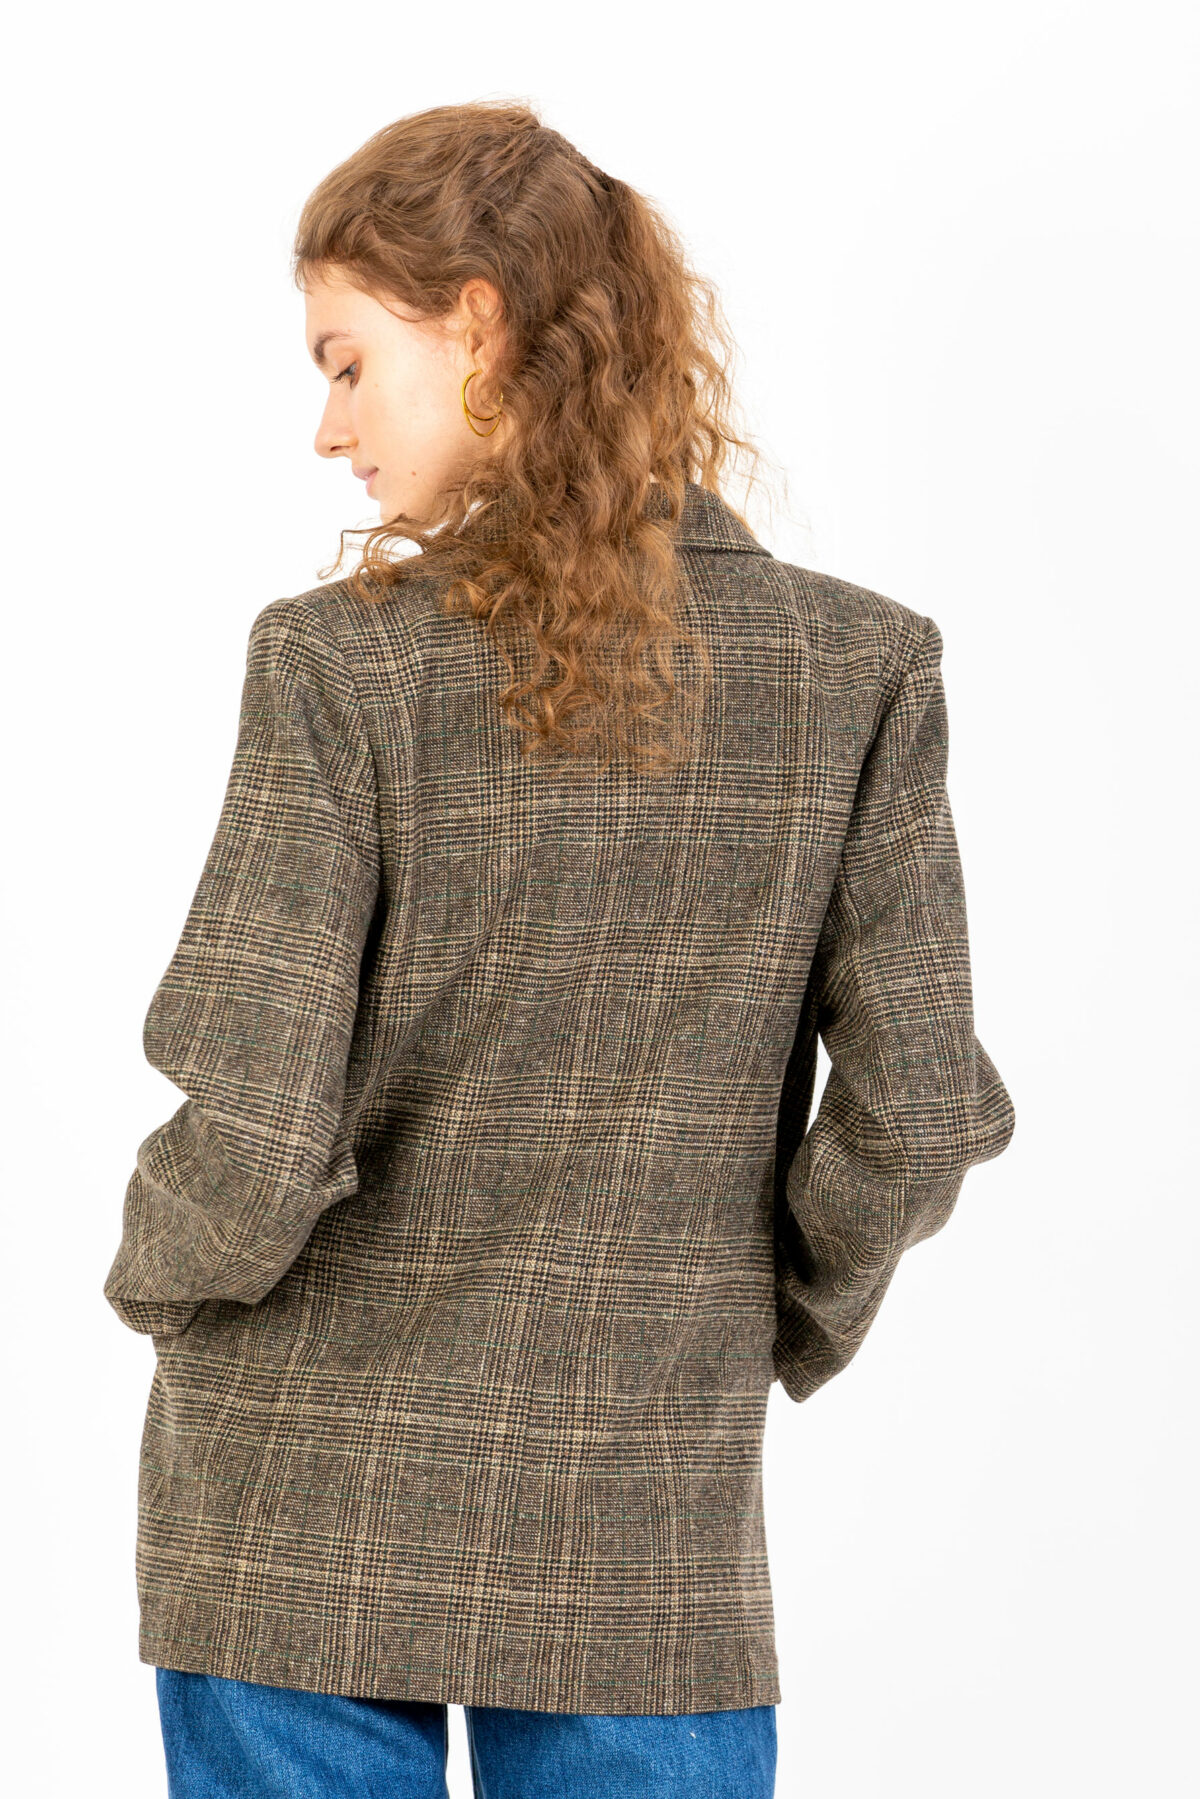 dixie-blazer-jacket-wool-checked-brown-suncoo-matchboxathens